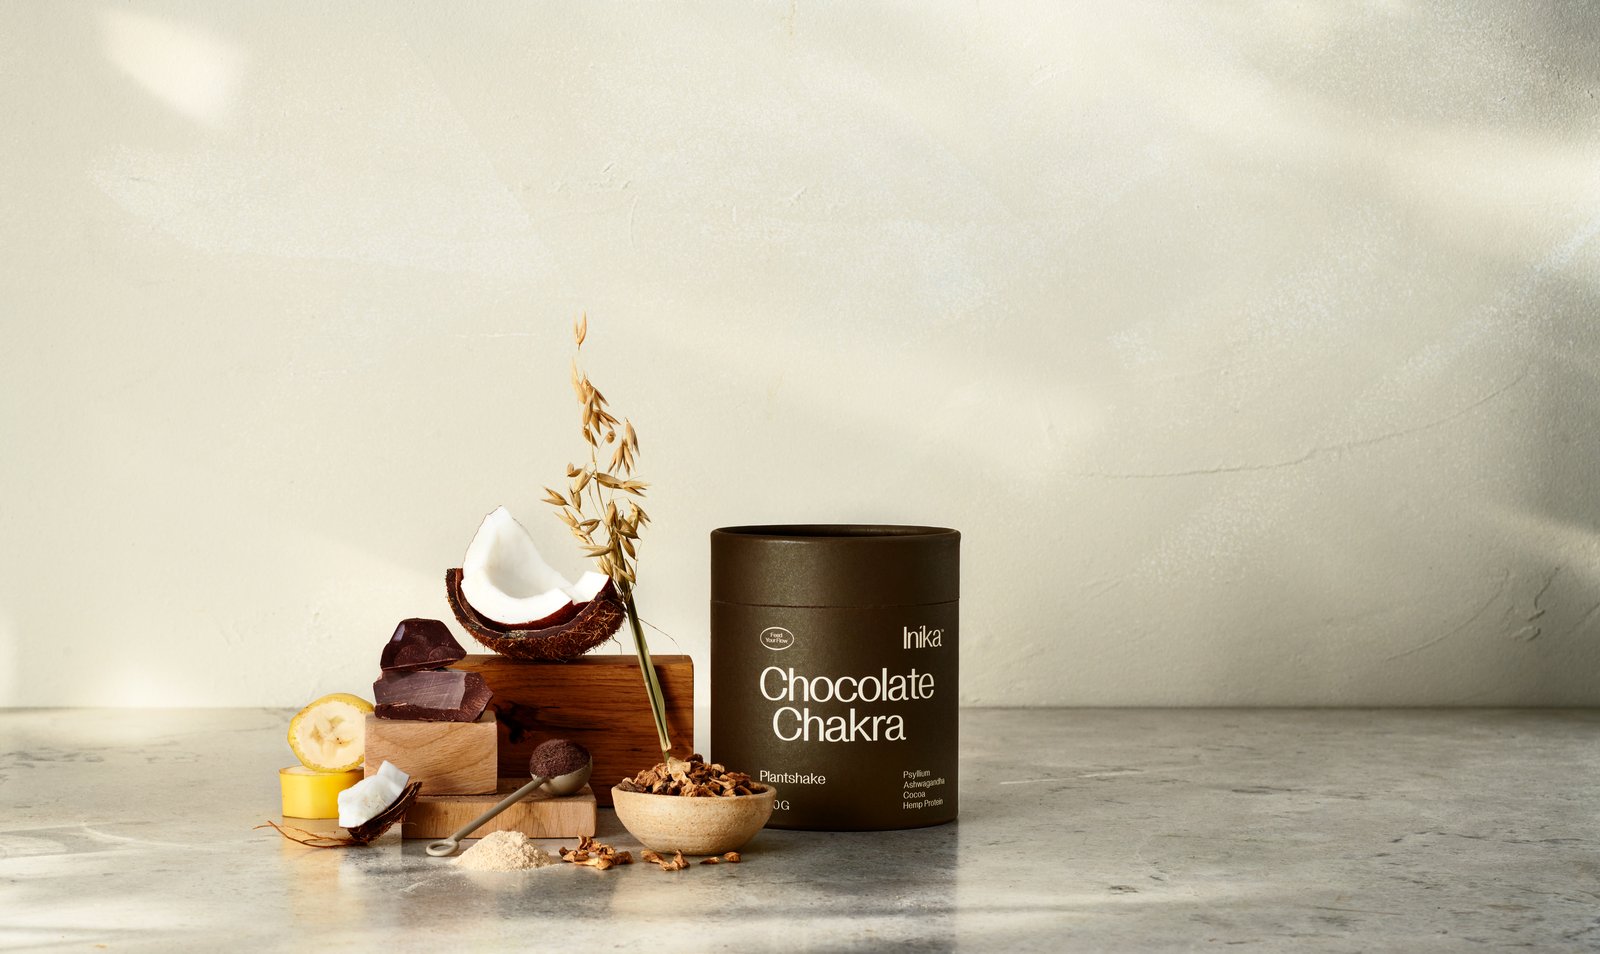 Inika Superfoods Plantshake Chocolate Chakra 350g